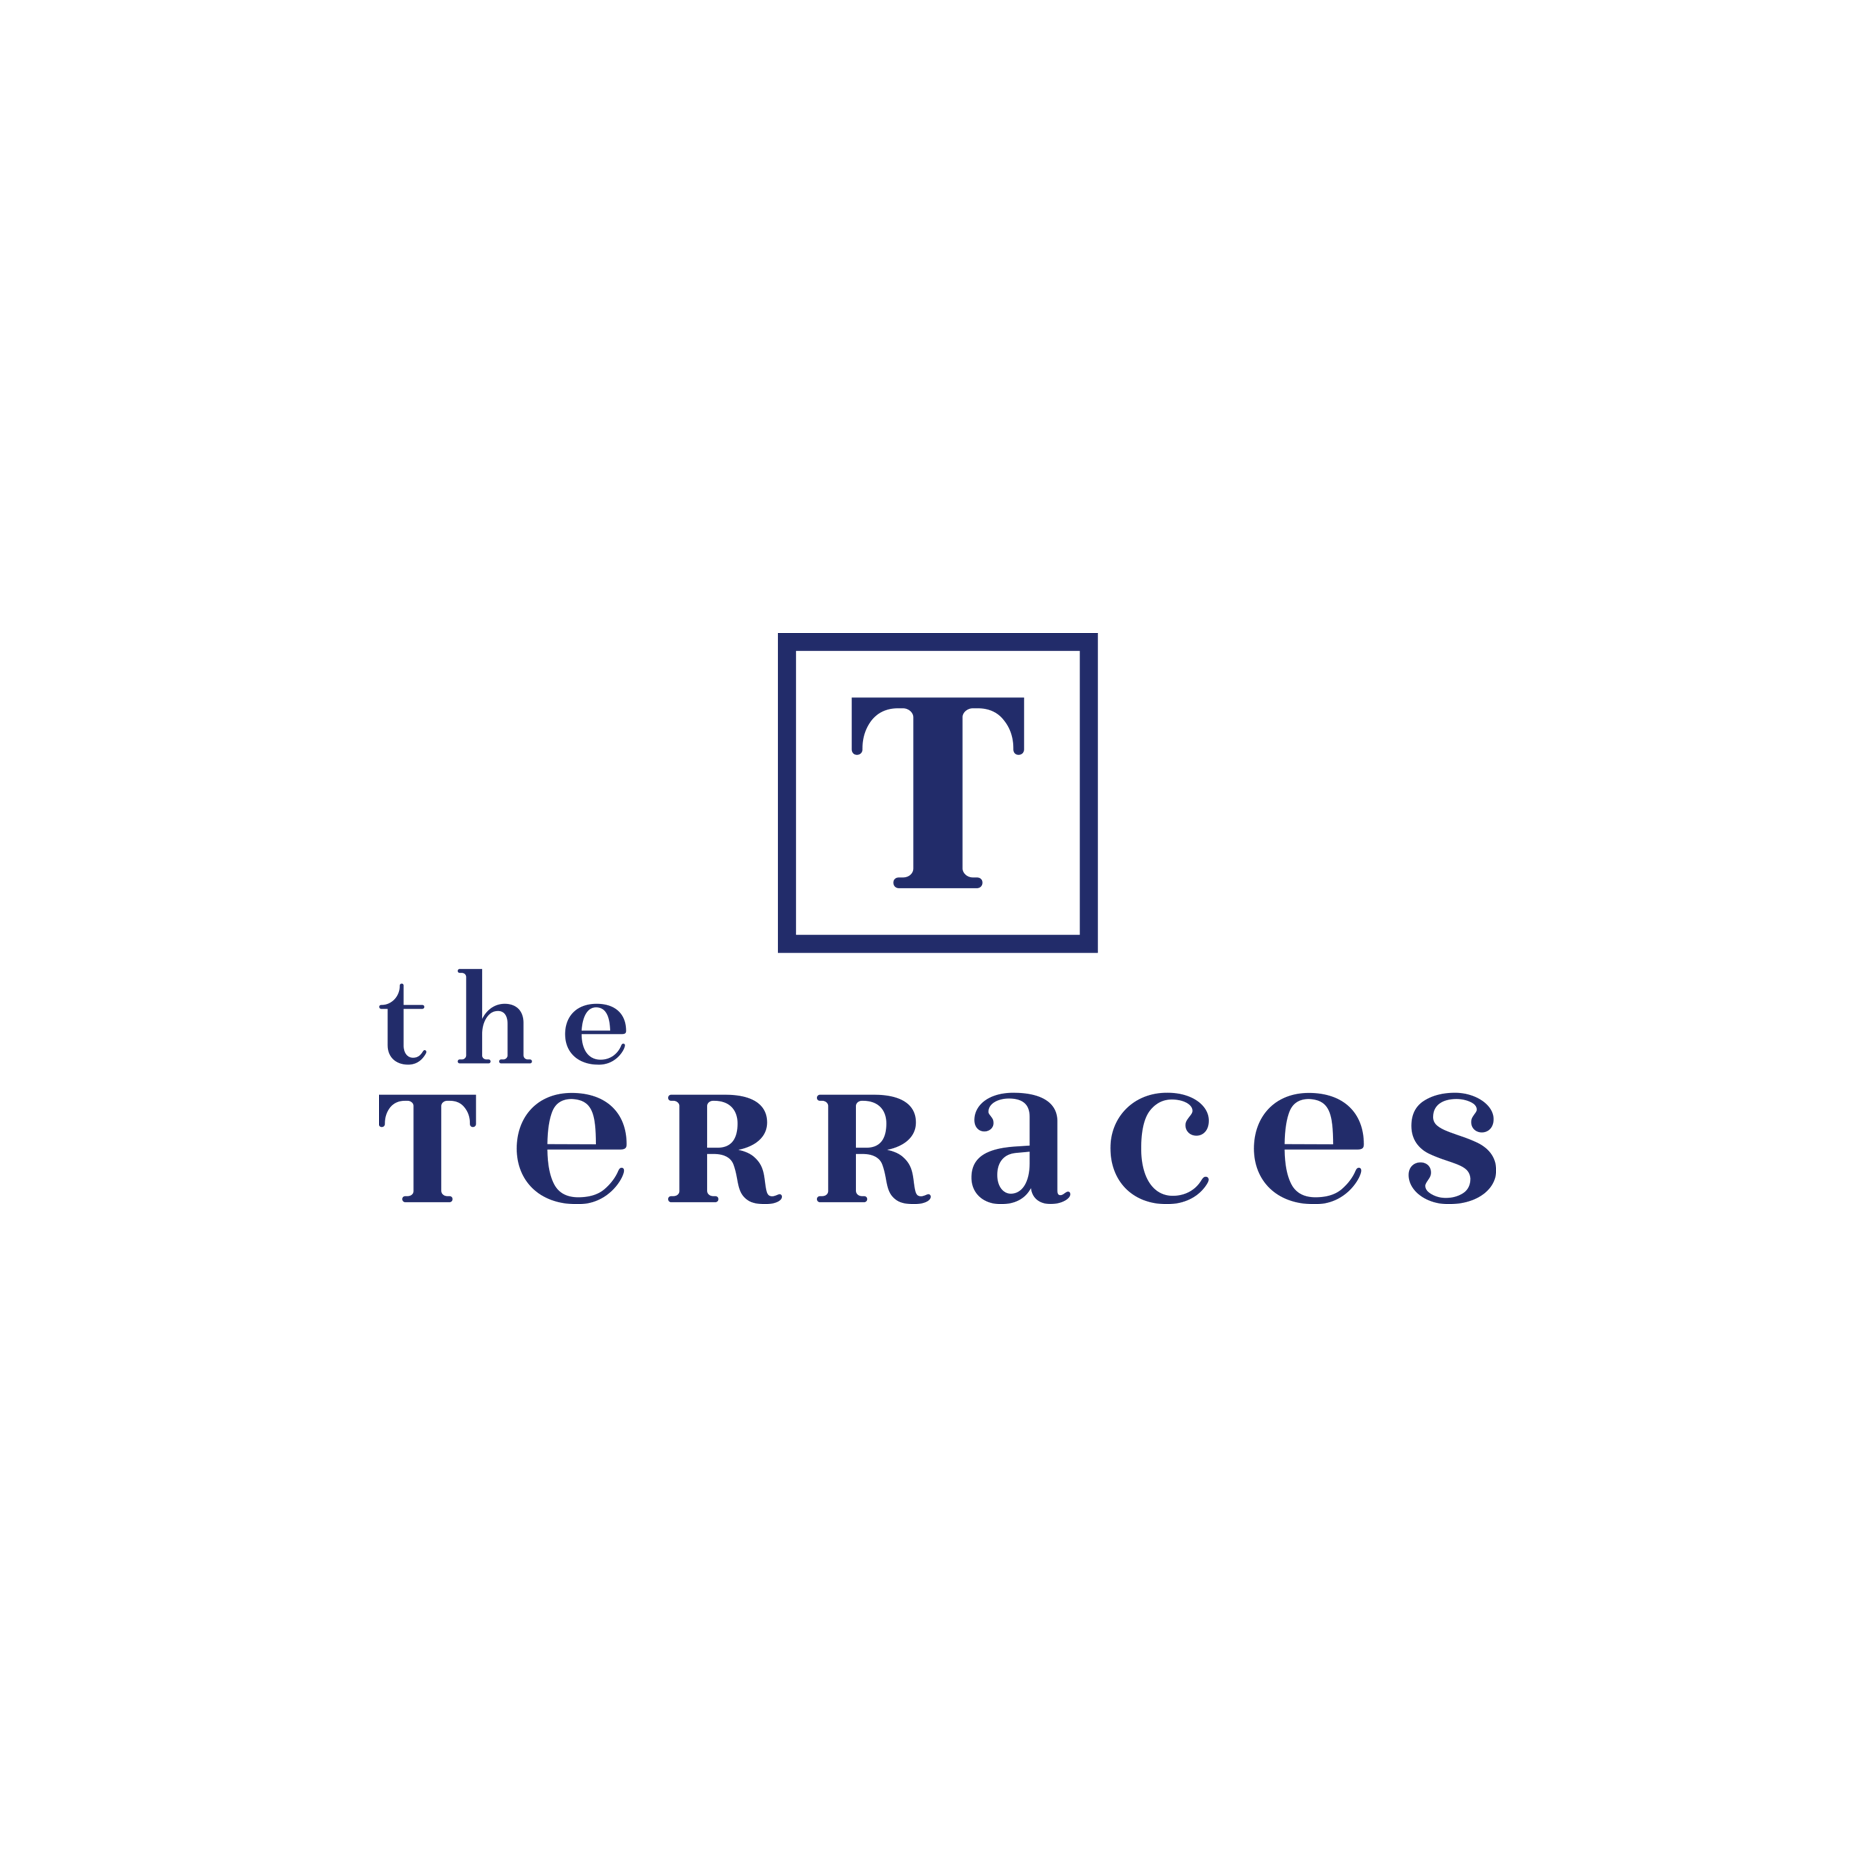 Terraces